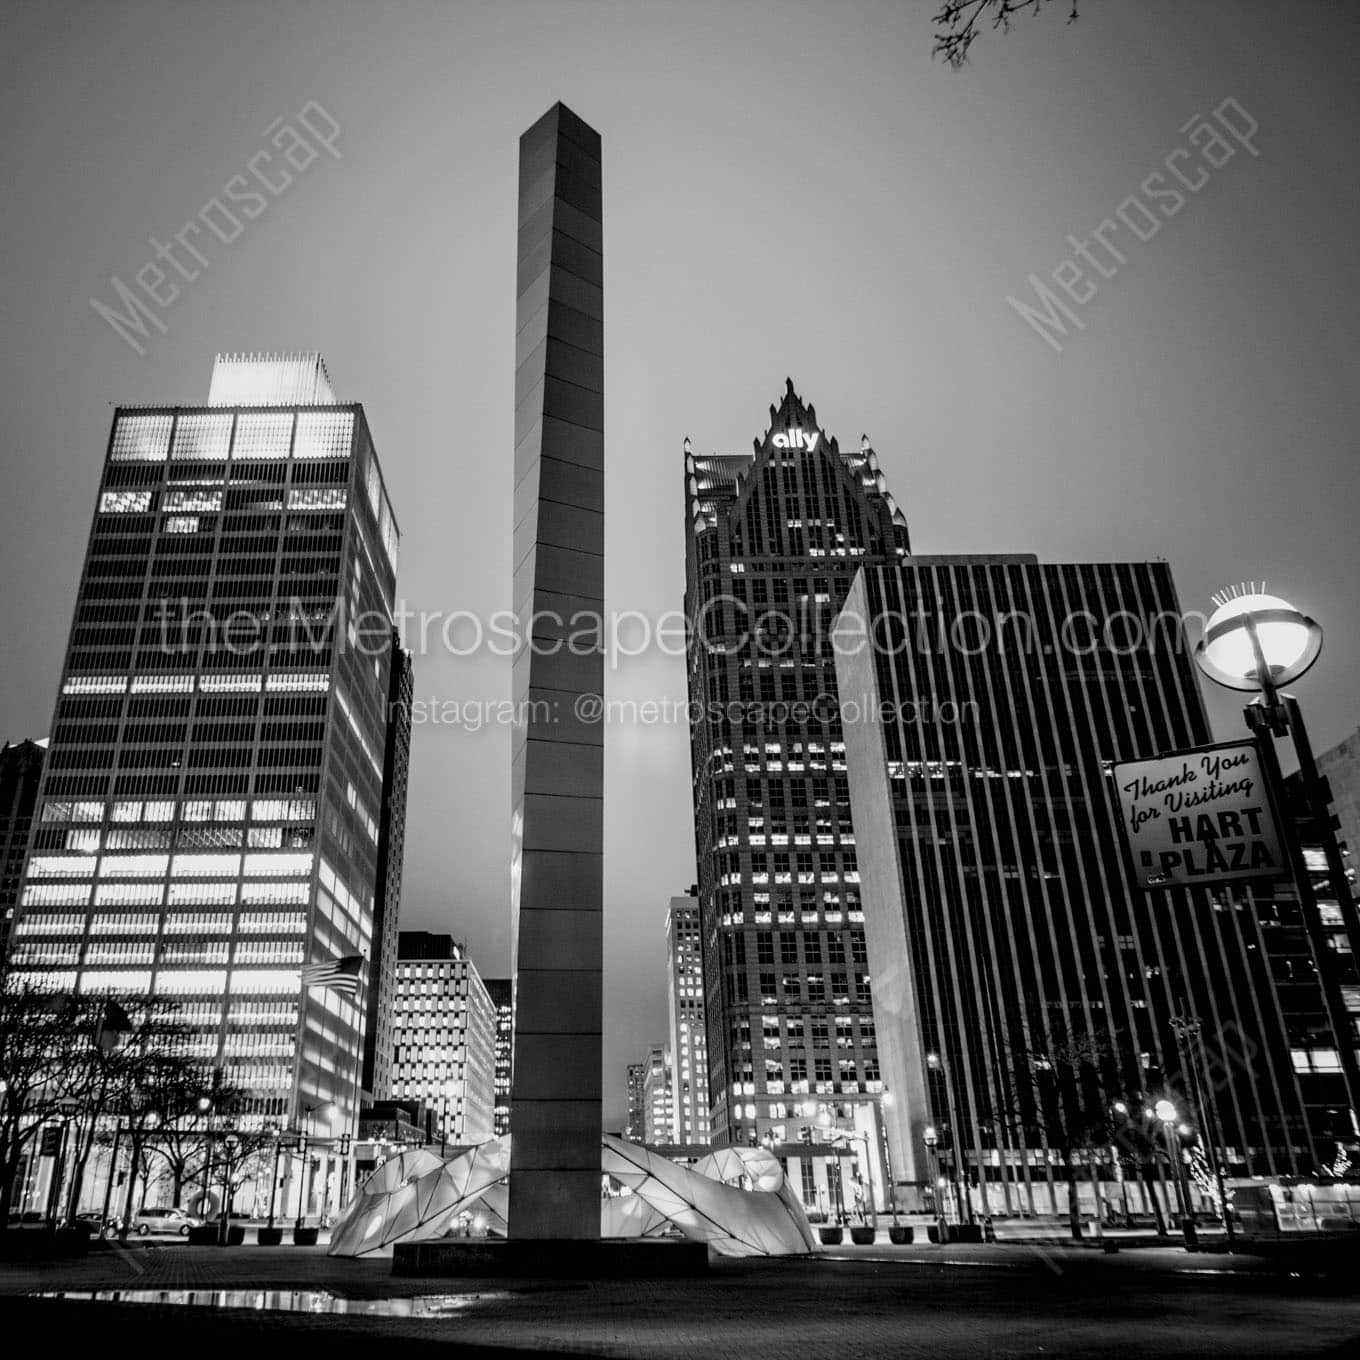 hart plaza downtown detroit skyline Black & White Wall Art